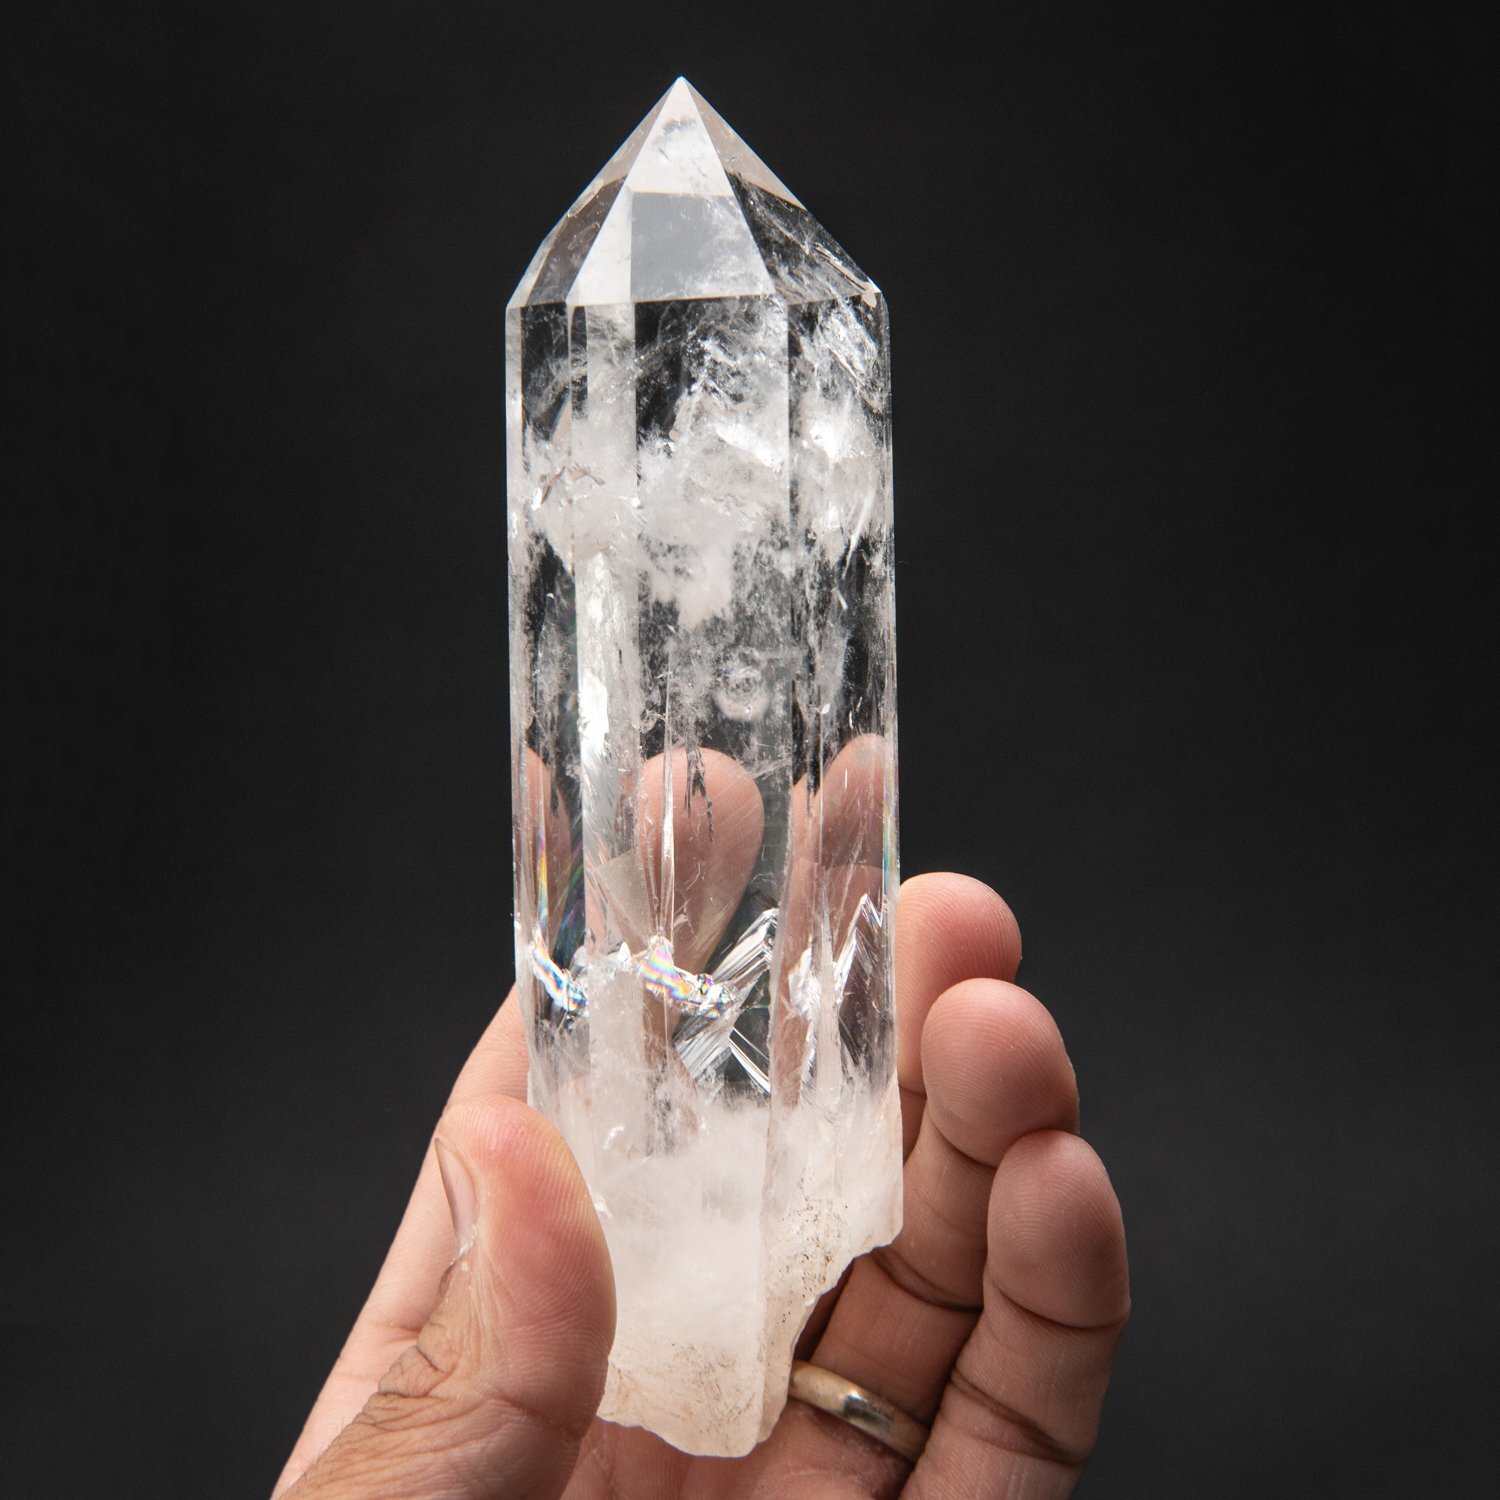 ONE Pound Small Quartz Rock Crystal Points Healing Stones